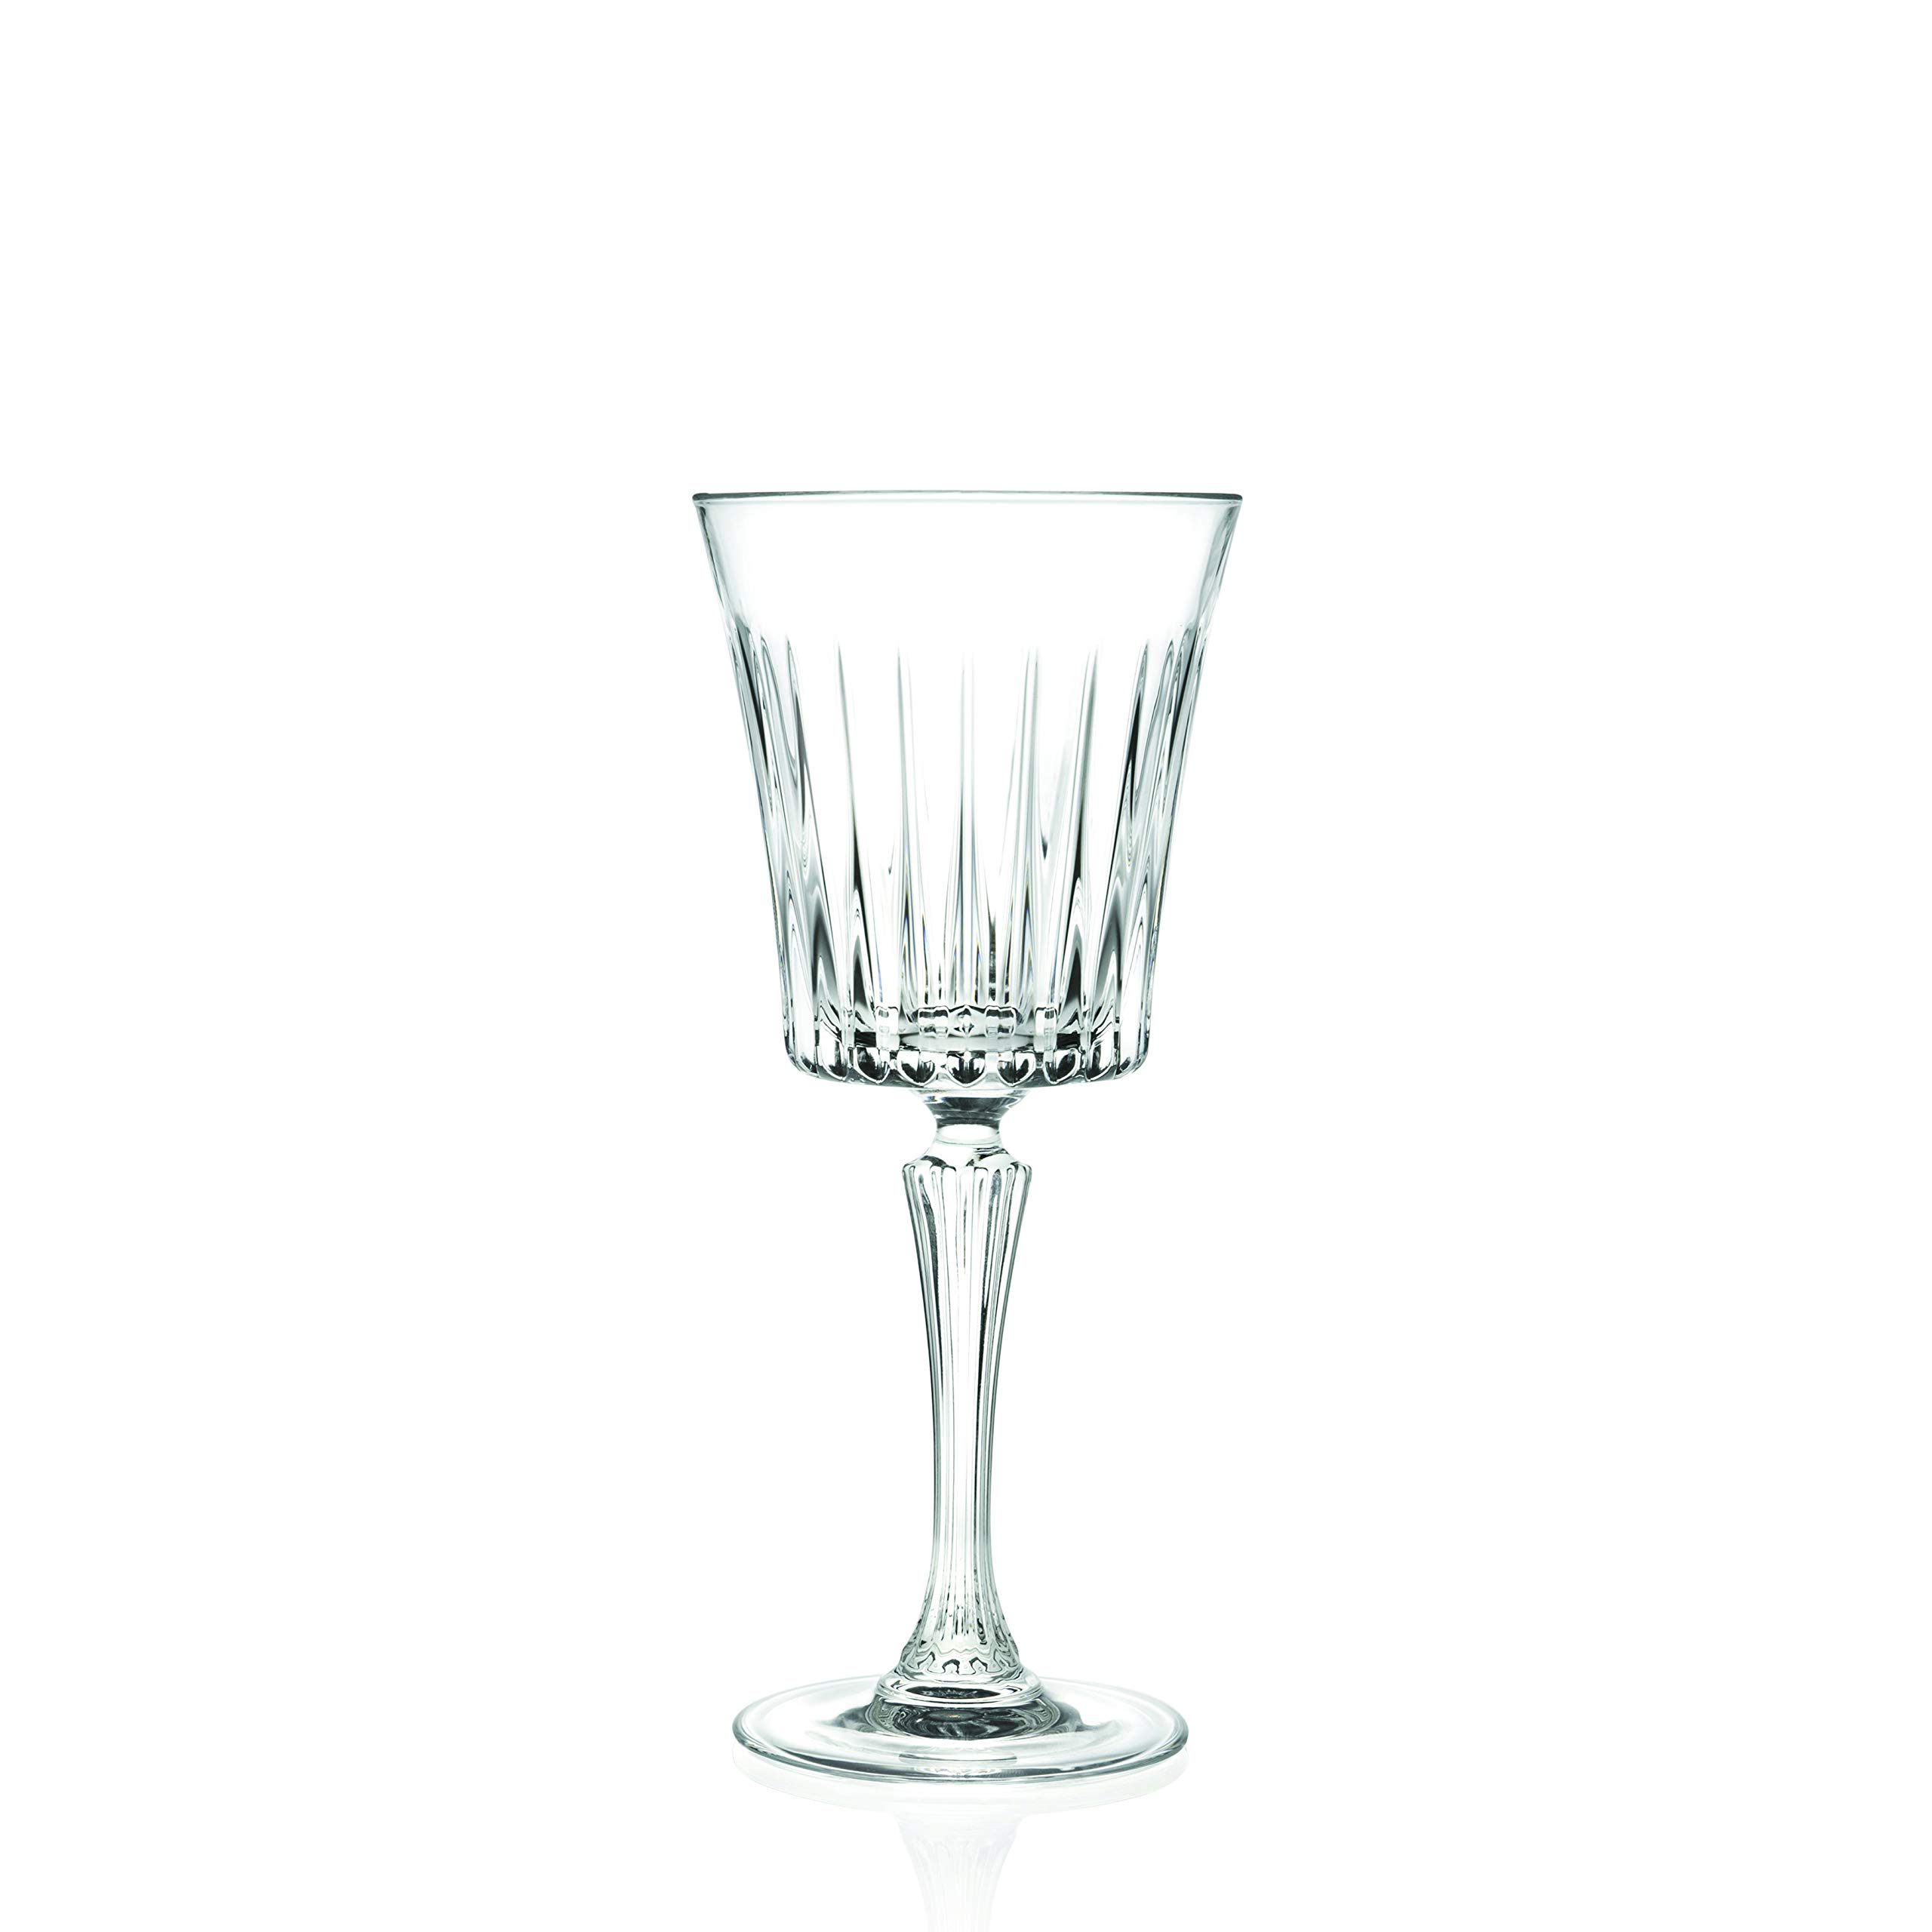 Barski Wine Glass - Goblet - Red Wine - White Wine - Water Glass - Stemmed Glasses - Set of 6 Goblets - Crystal like Glass - 7 oz. Beautifully Designed Made in Europe